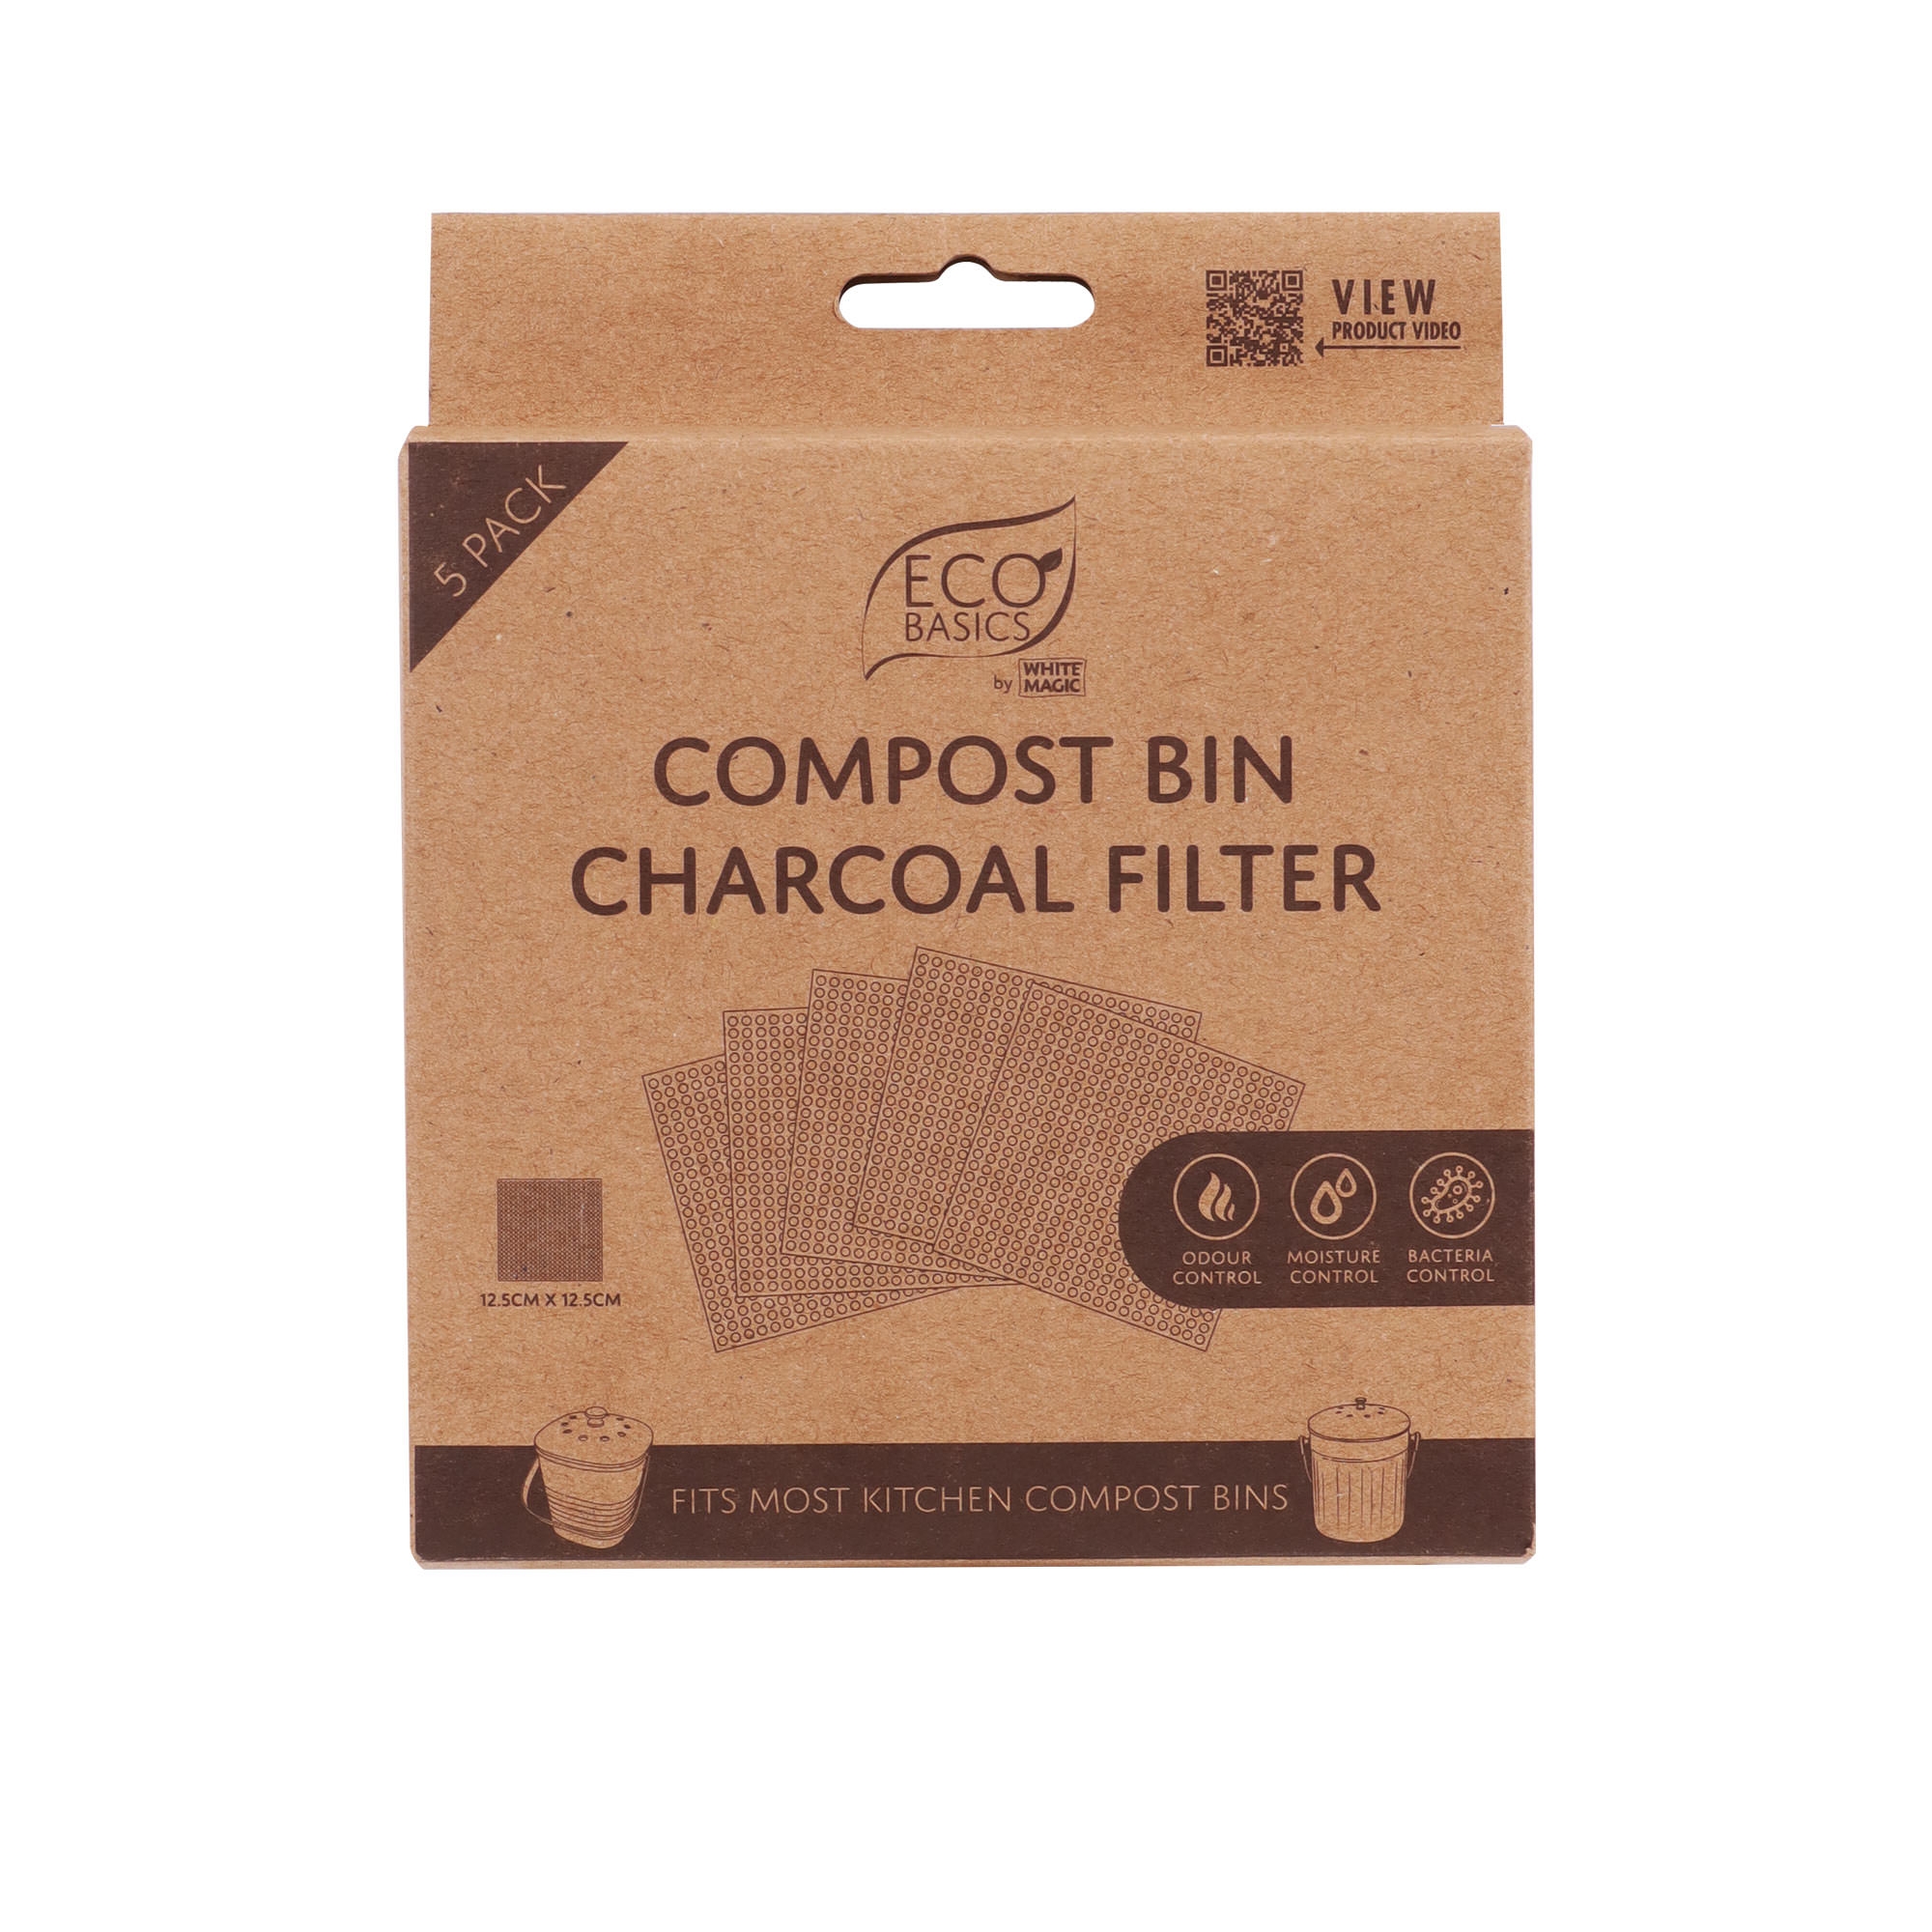 White Magic Eco Basics Compost Bin Charcoal Filters 5pk Image 2